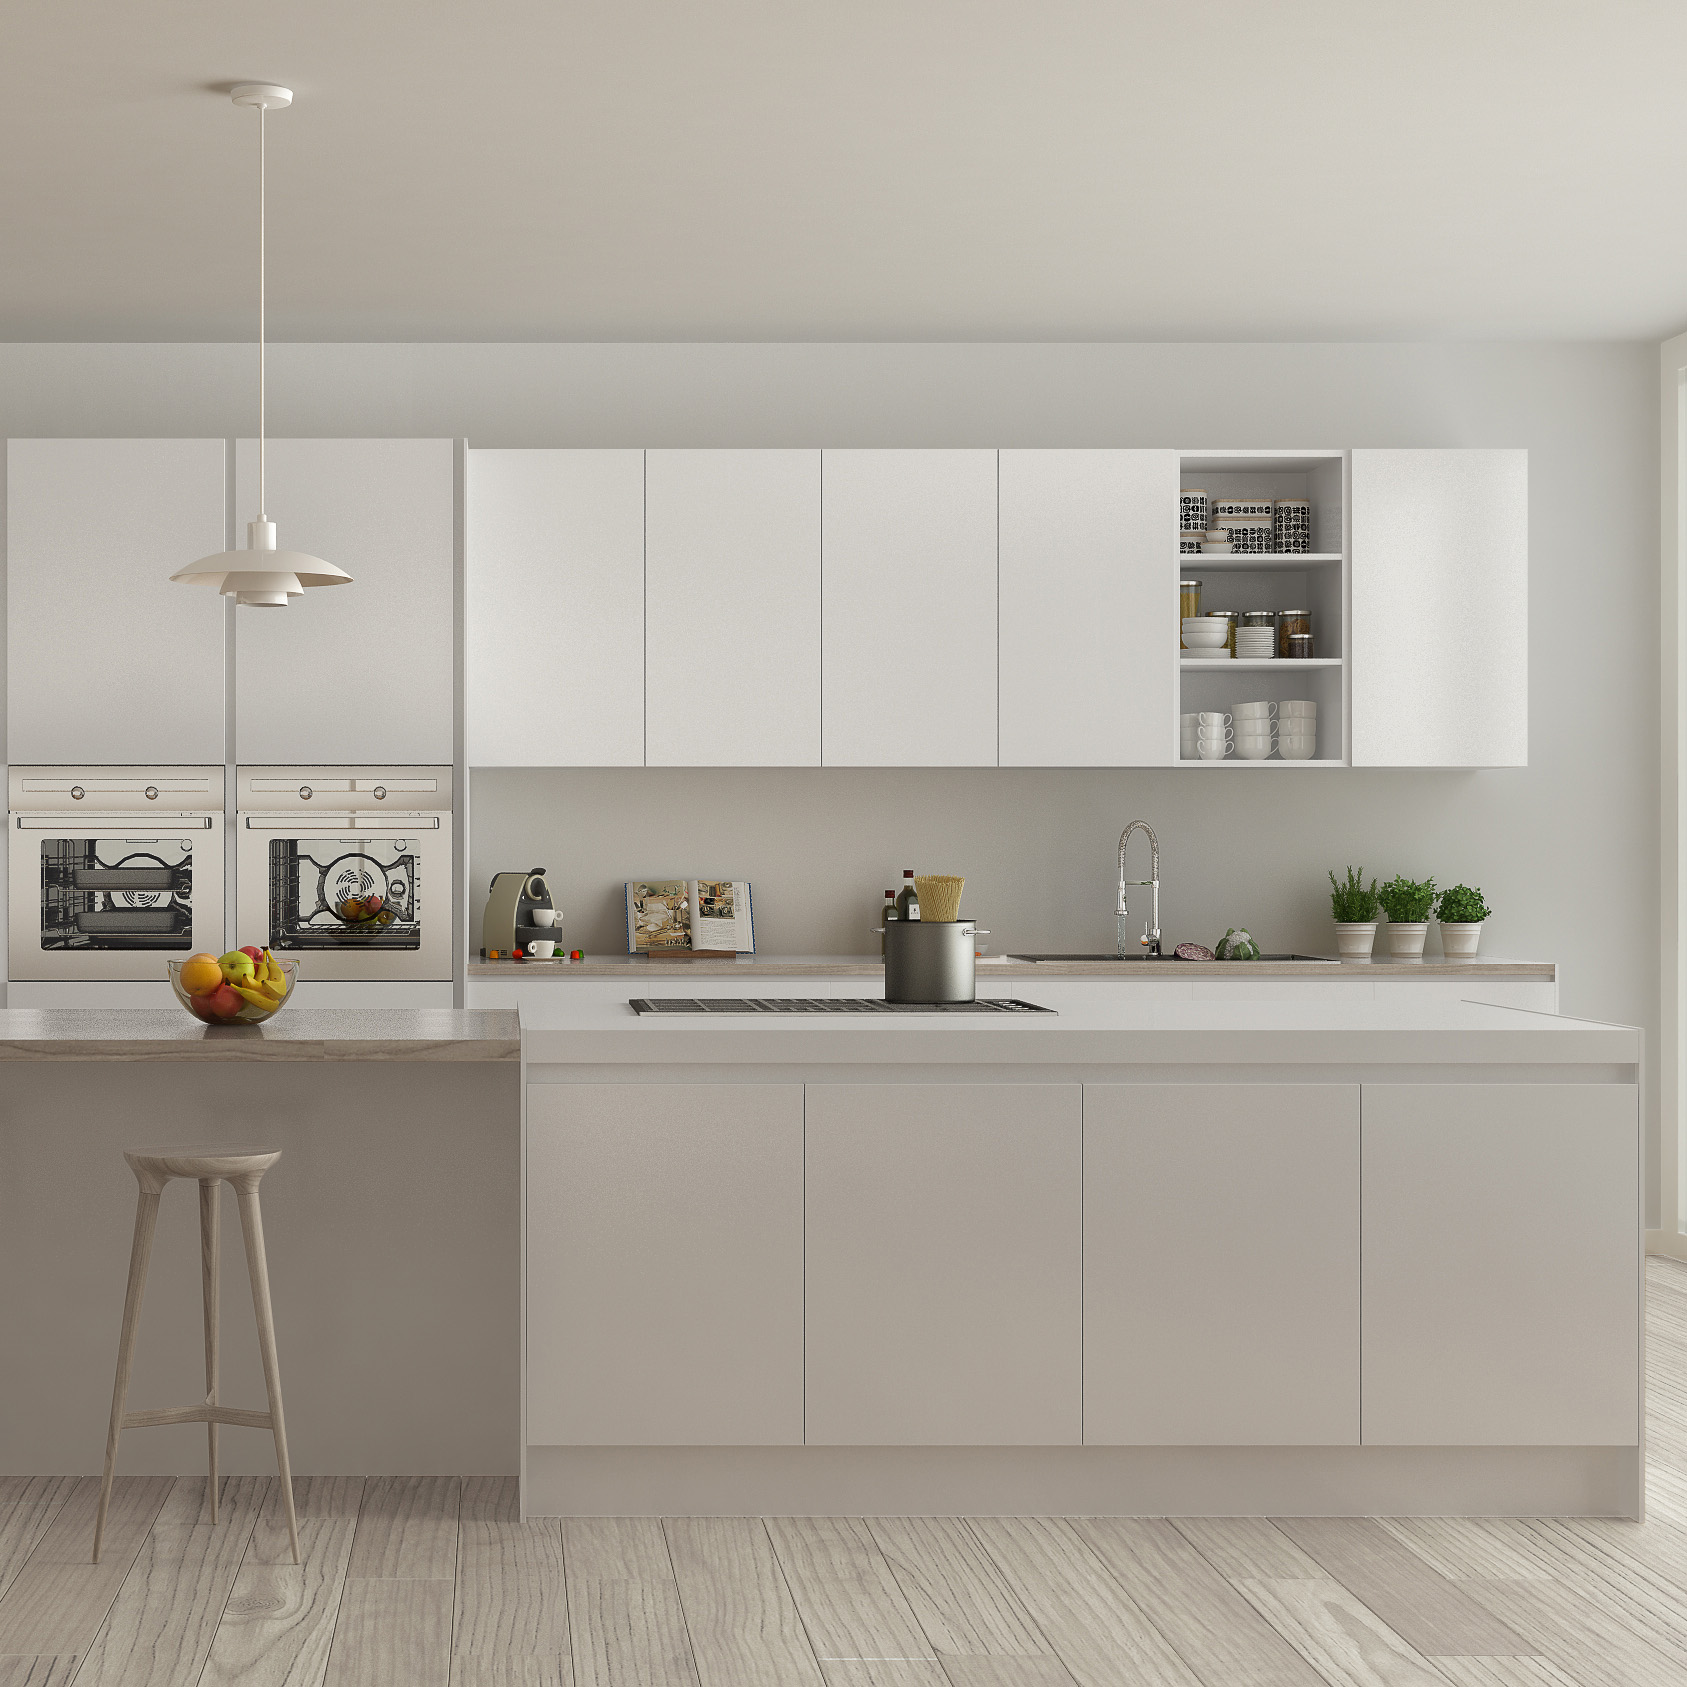 Best quality Unfinished Rta Cabinets -
 Kangton Matt Grey Lacquer Kitchen Cabinet with MDF Customized Design – Kangton